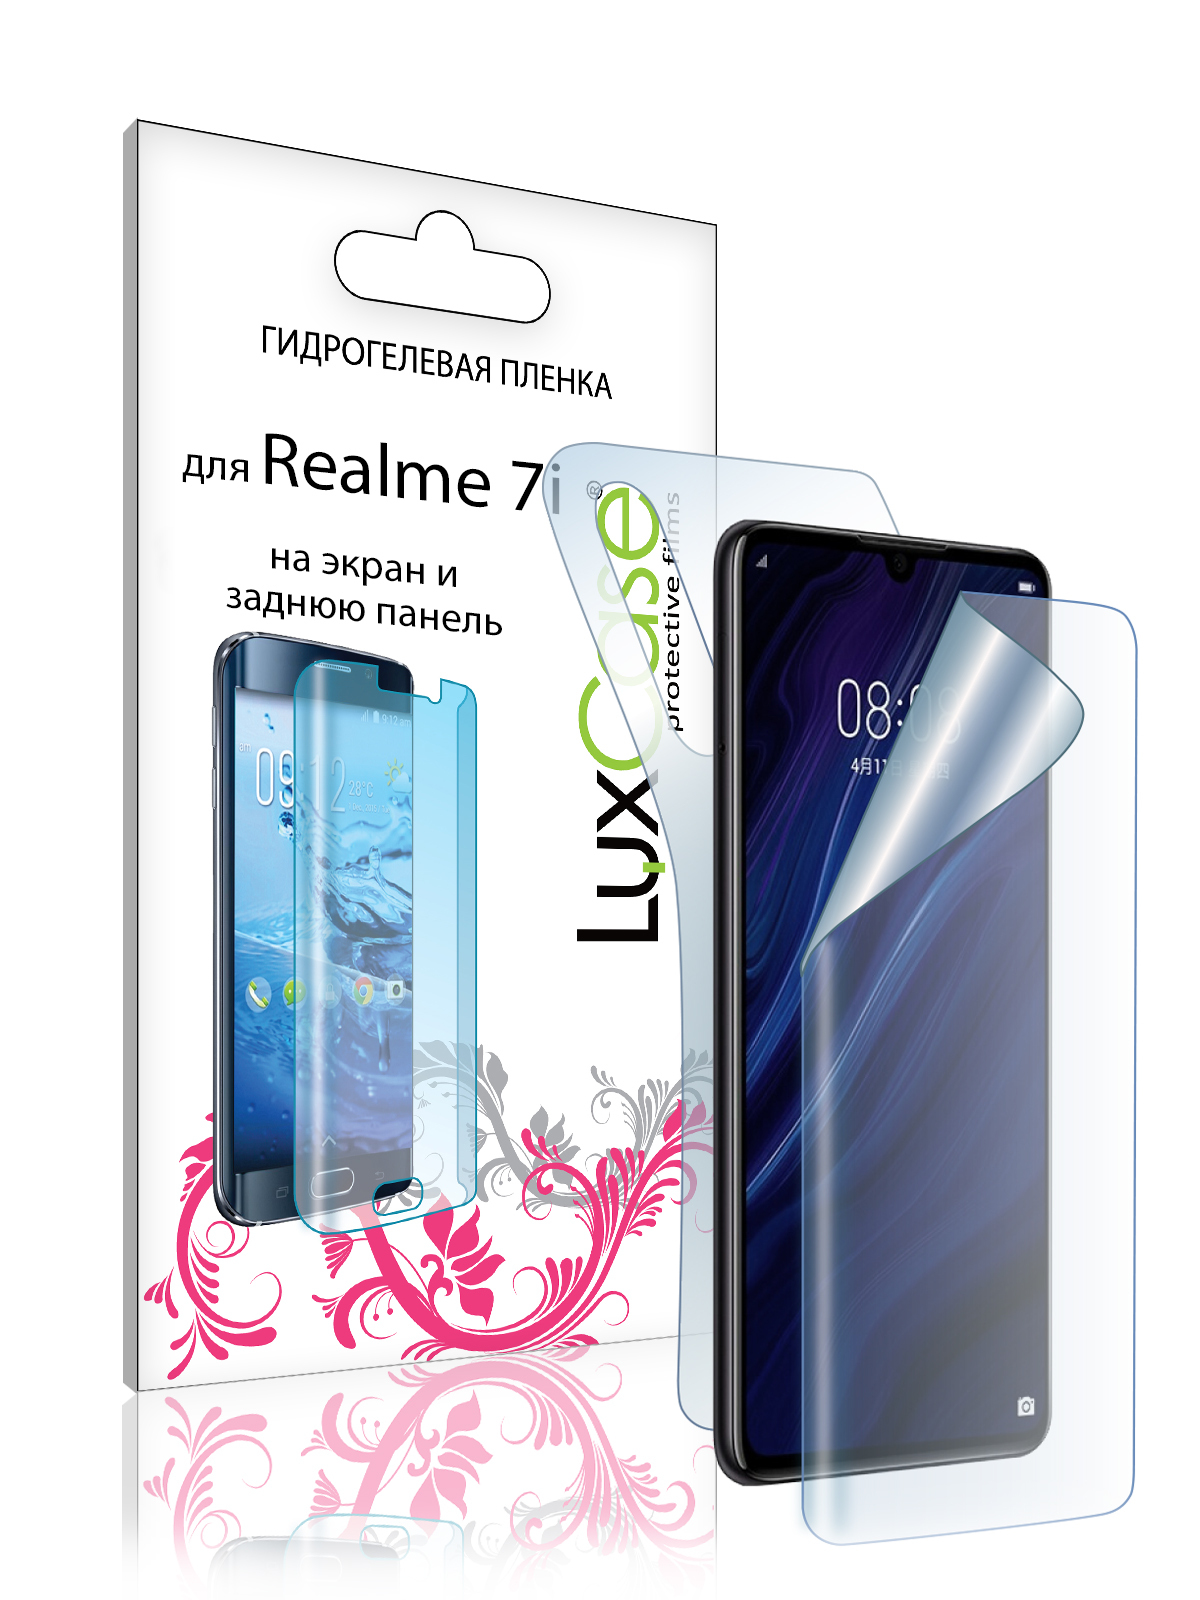 Пленка гидрогелевая LuxCase для Realme 7i 0.14mm Front and Back Transparent 86593 гидрогелевая пленка luxcase для realme 7i 0 14mm front transparent 86591